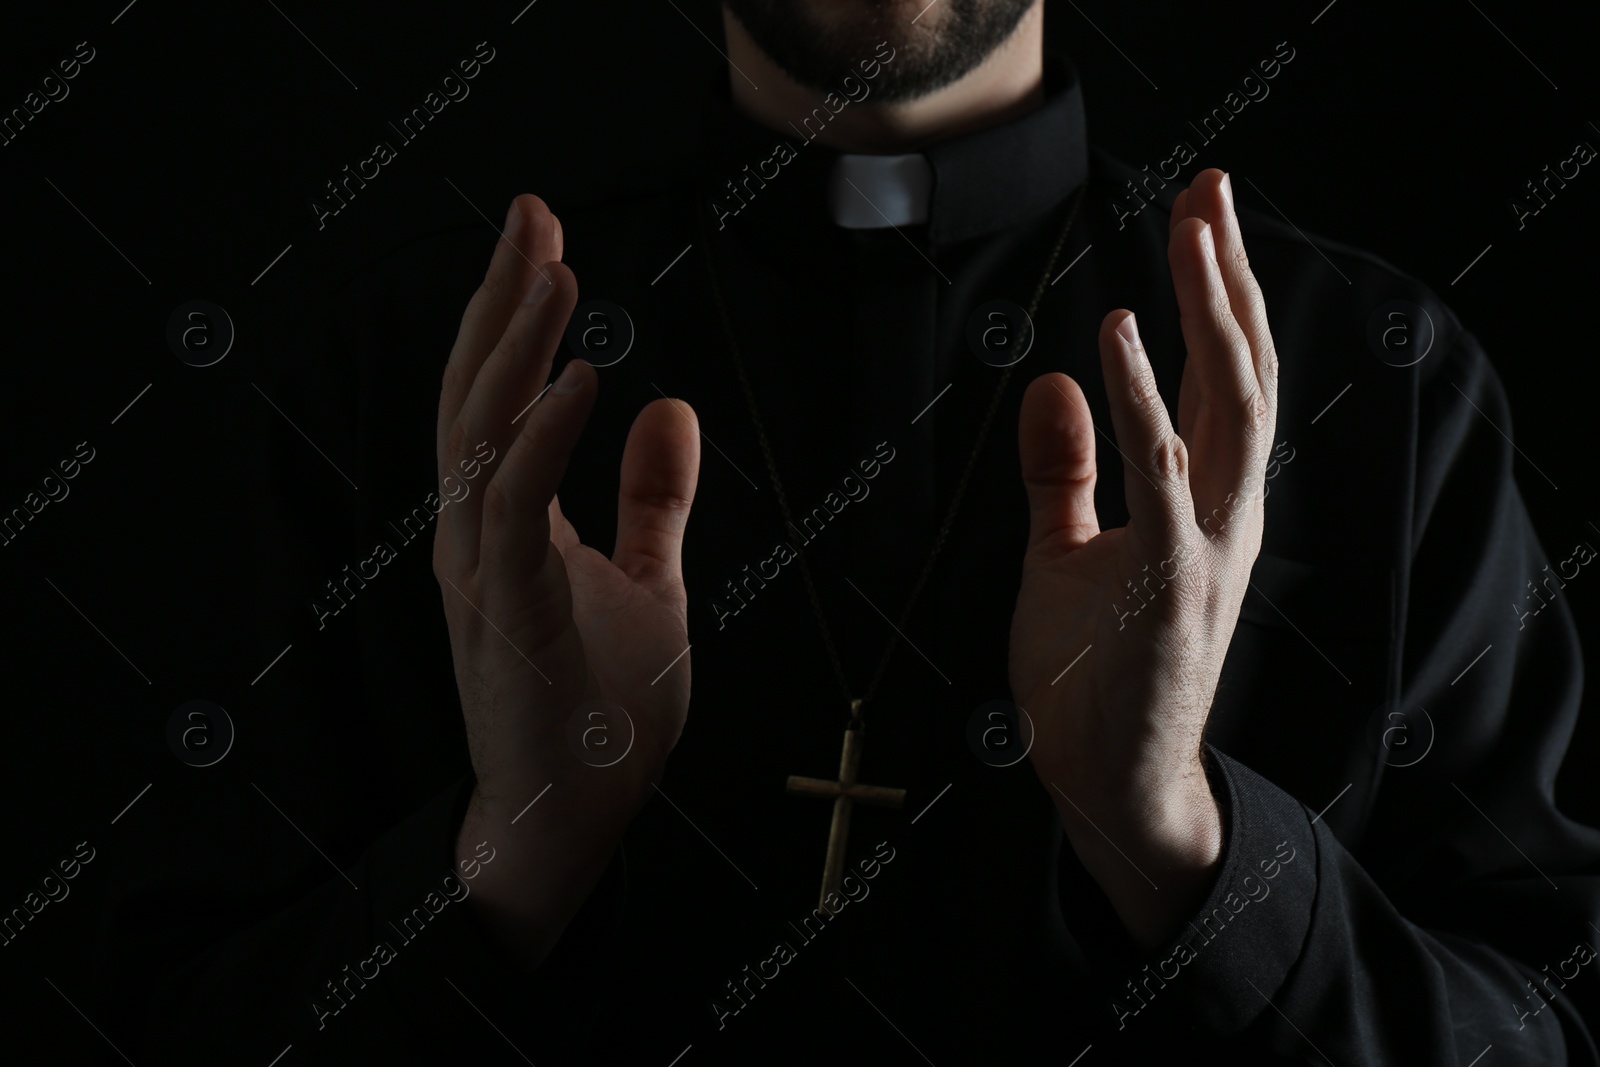 Photo of Priest in cassock praying on dark background, closeup